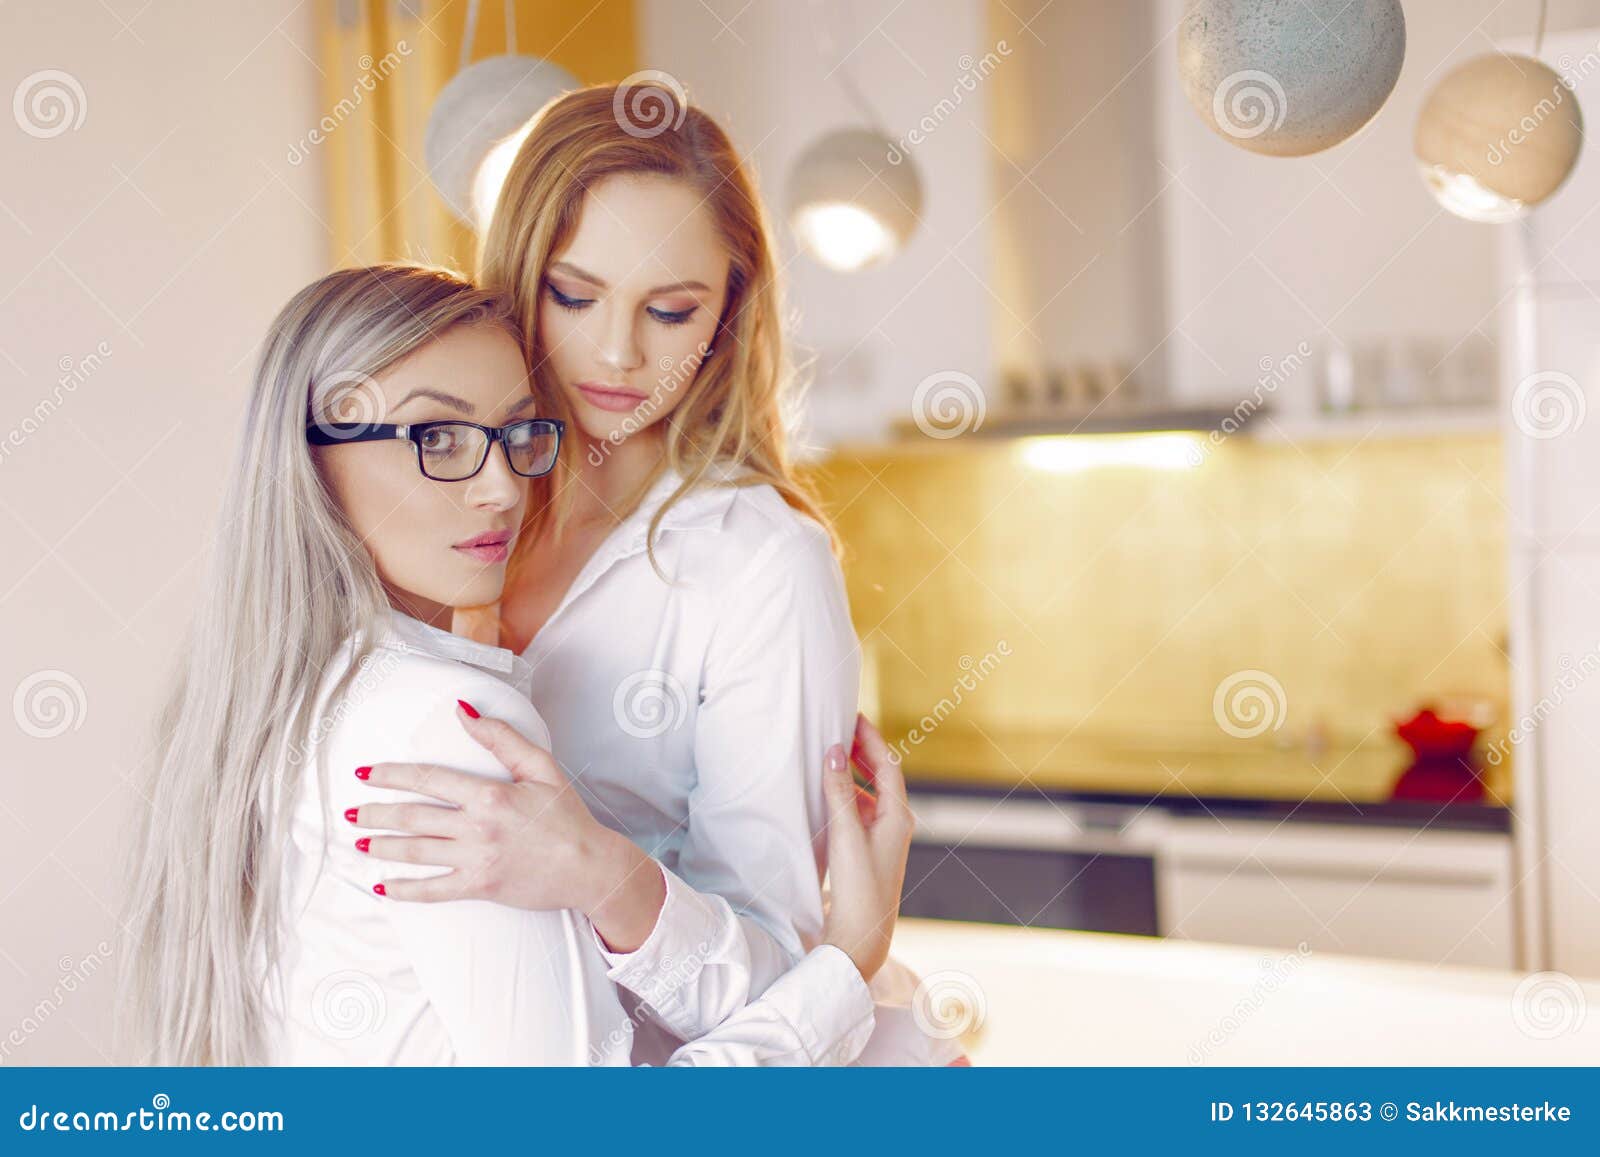 sexy lesbians in the kitchen sex scene